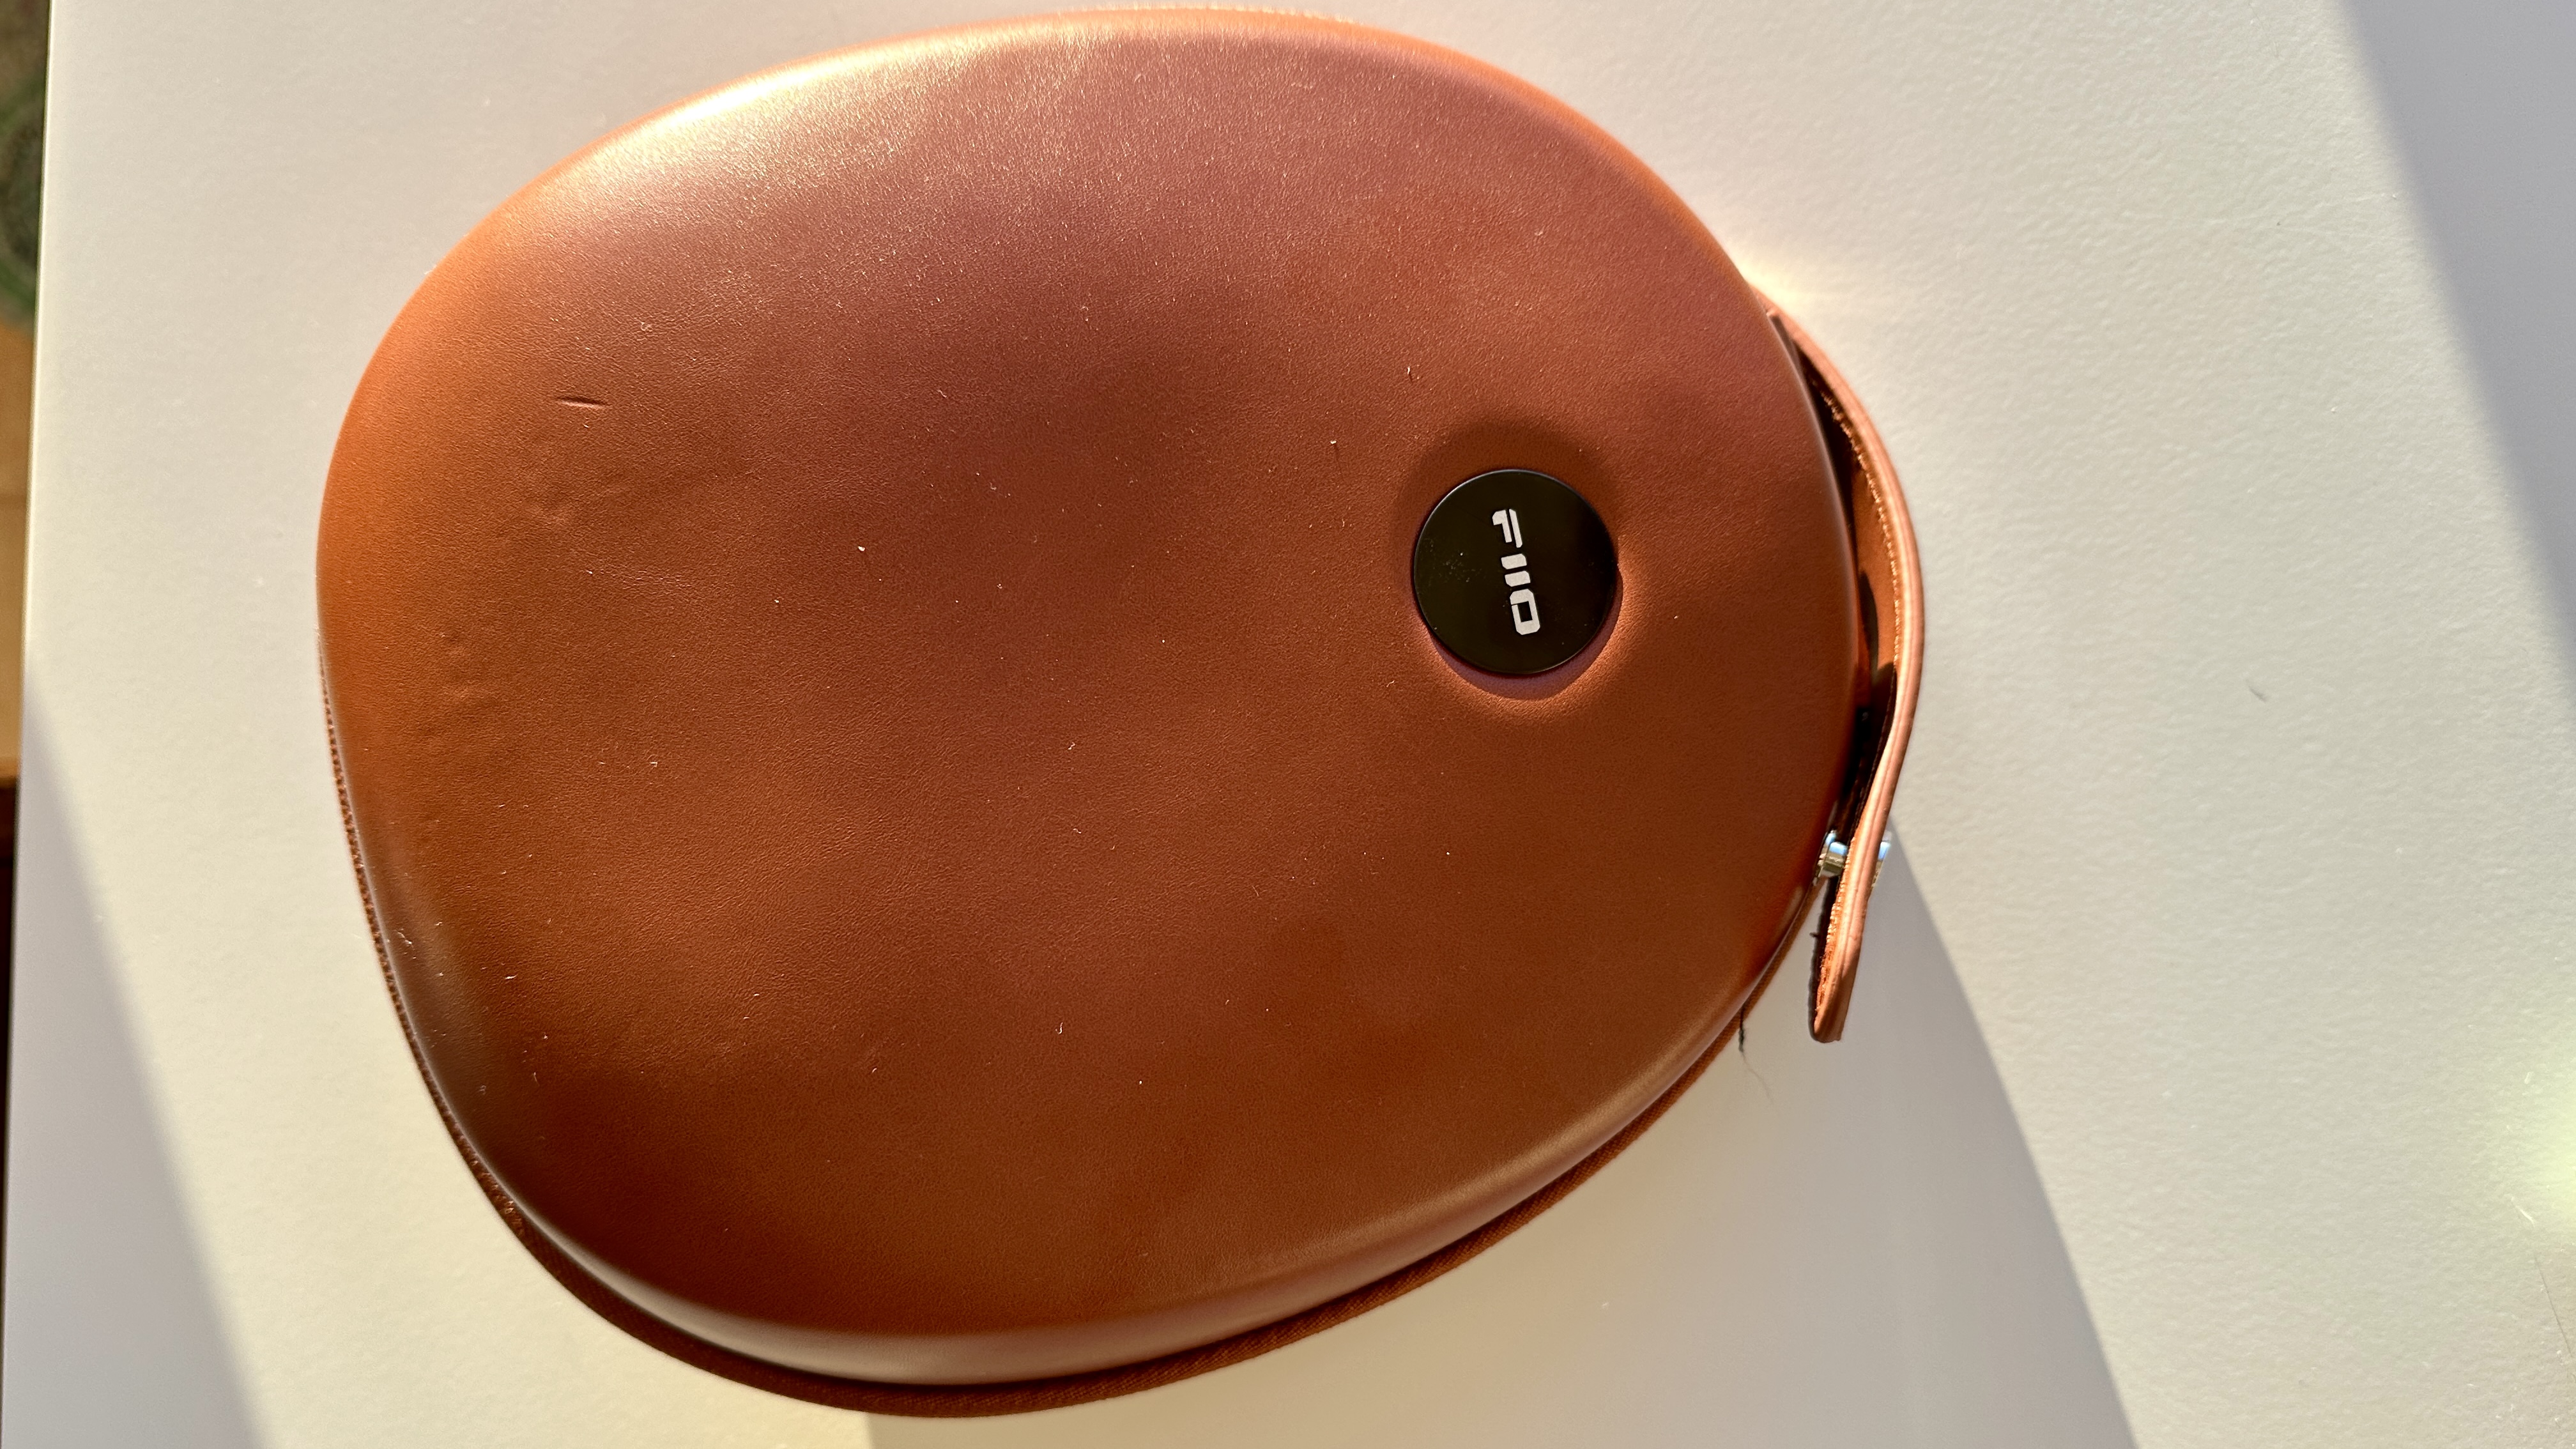 Fiio FT5 headphones case, on a beige table